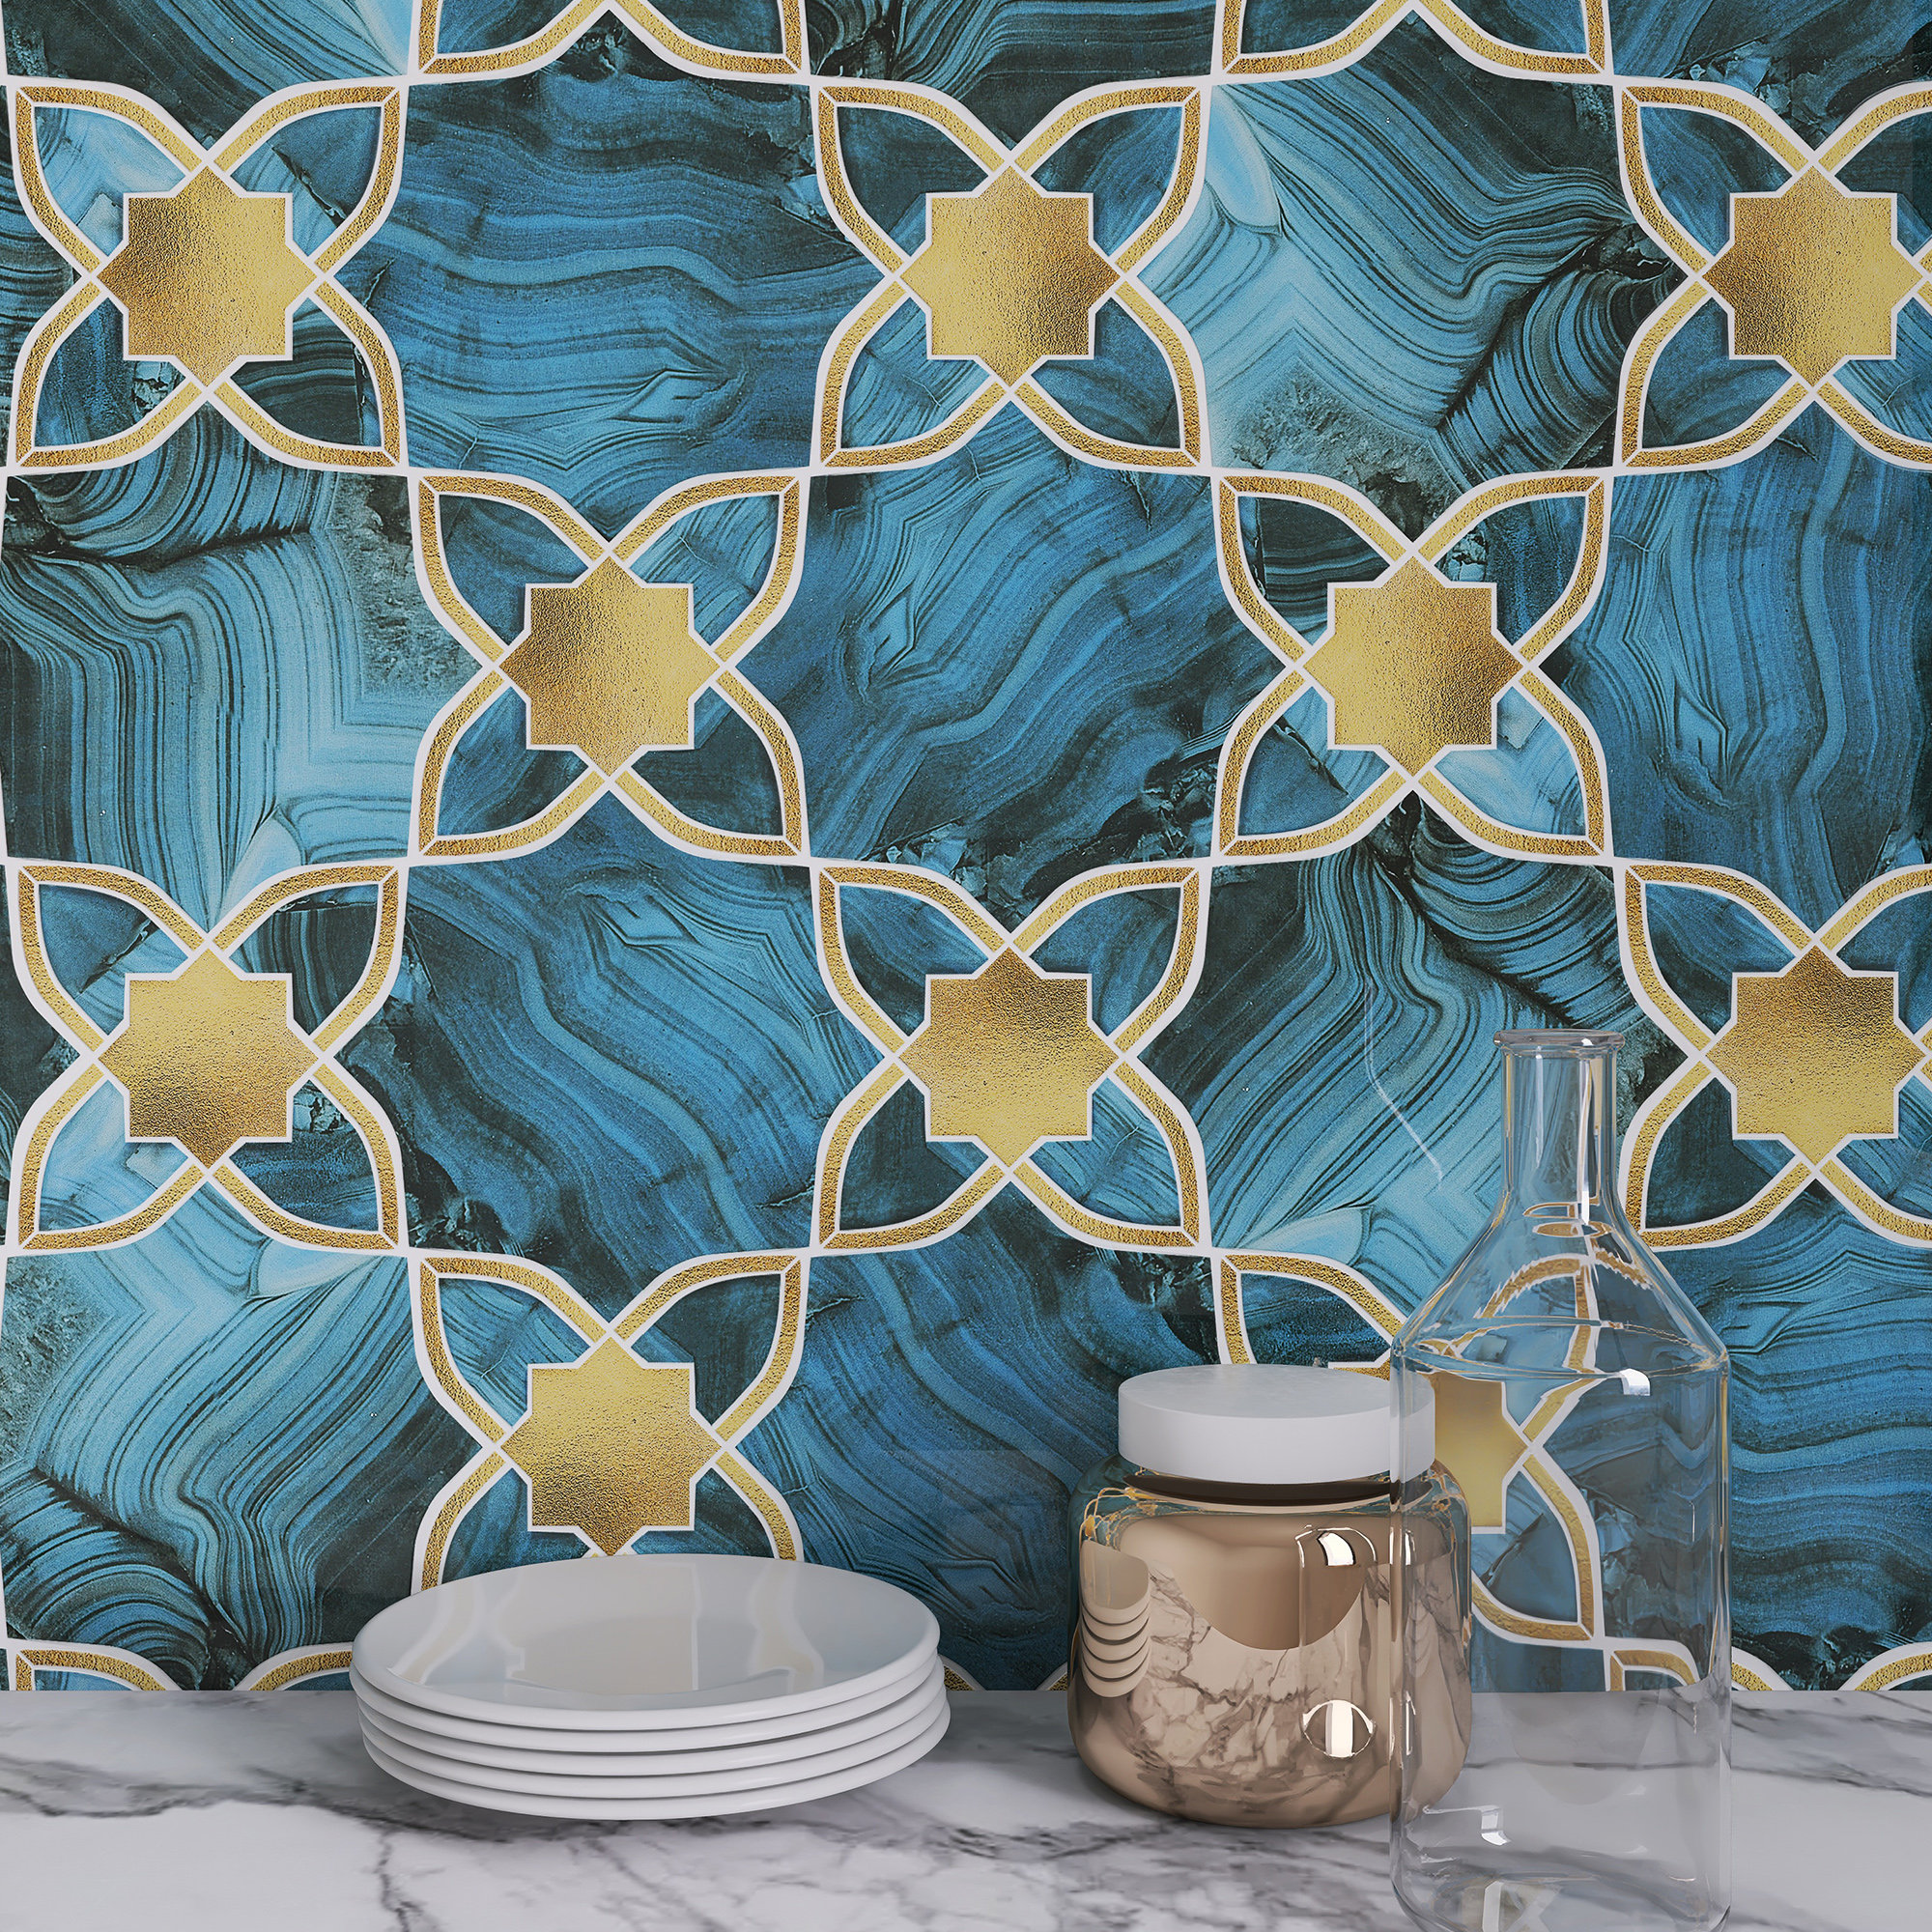 Glass mirror mosaic tile sheets gold mosaic bathroom shower wall tiles  design